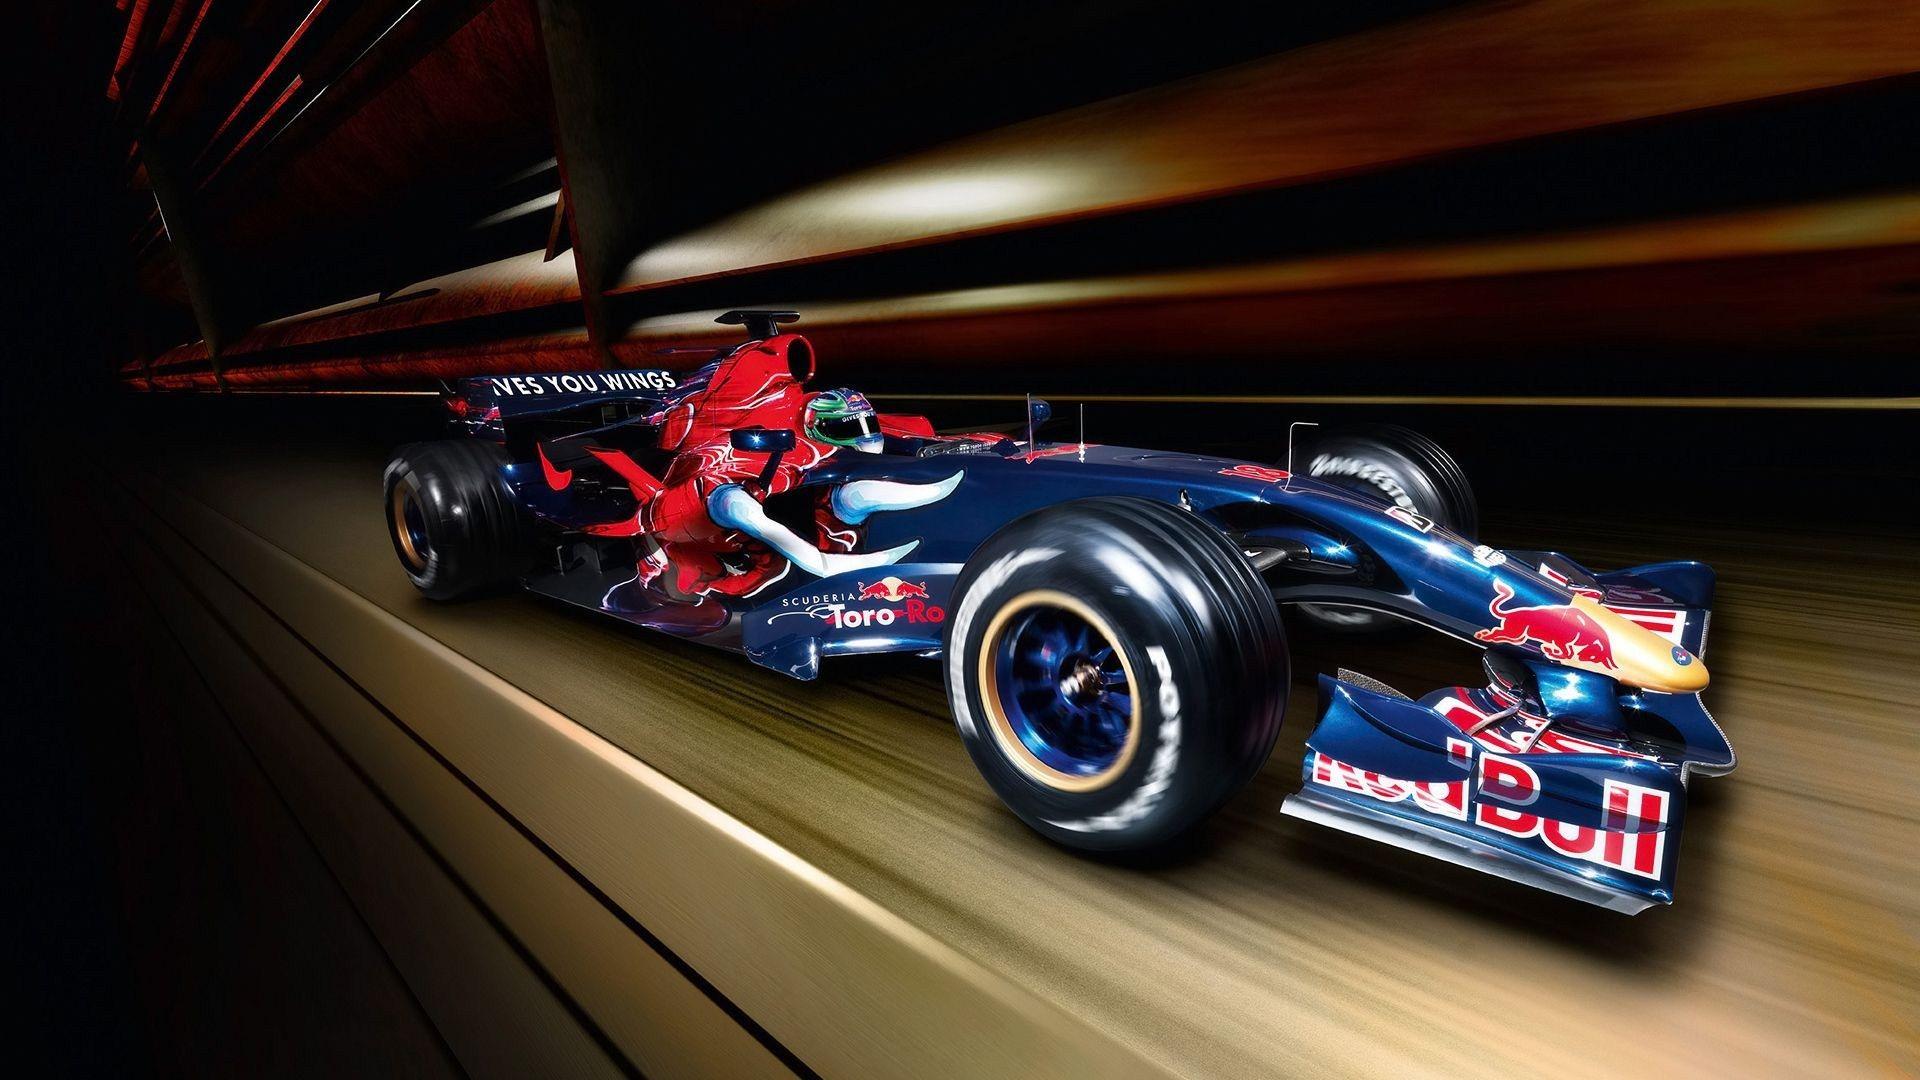 F1 Car Image For Free HD Desktop Wallpaper, Instagram photo